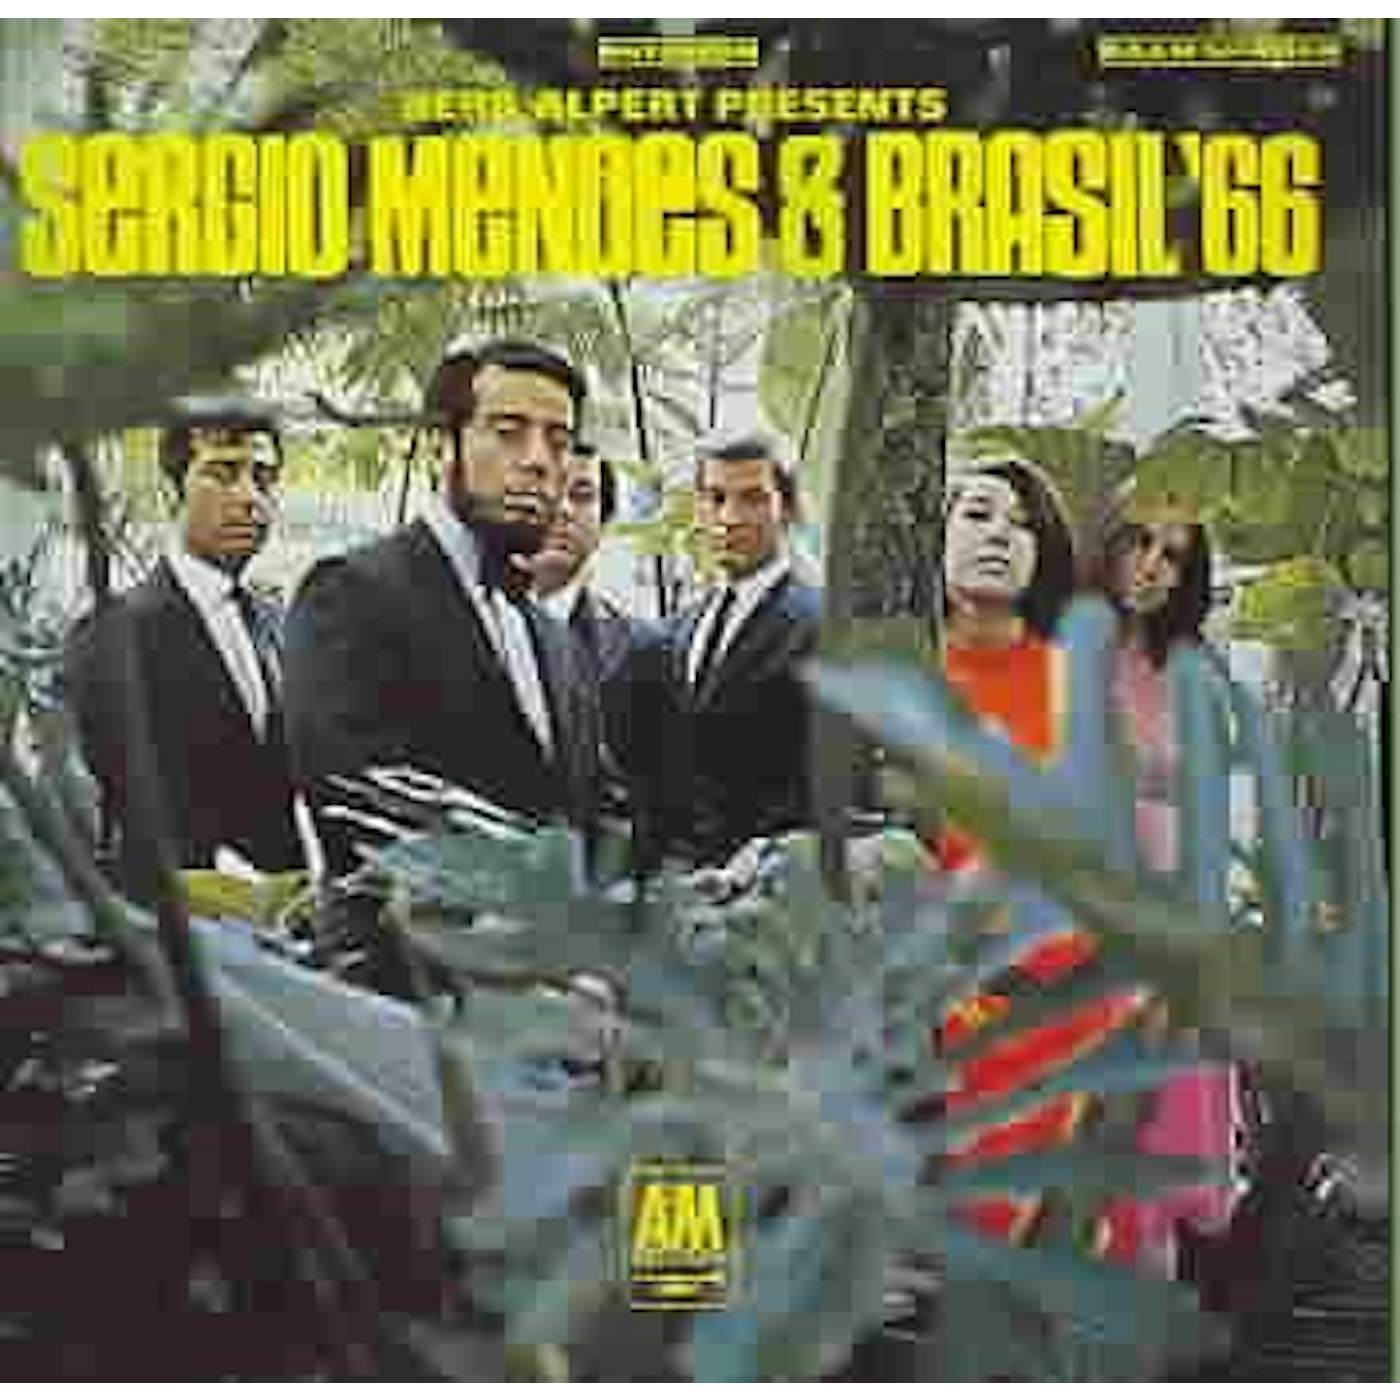 Sergio Mendes & Brasil '66 Herb Alpert Presents CD